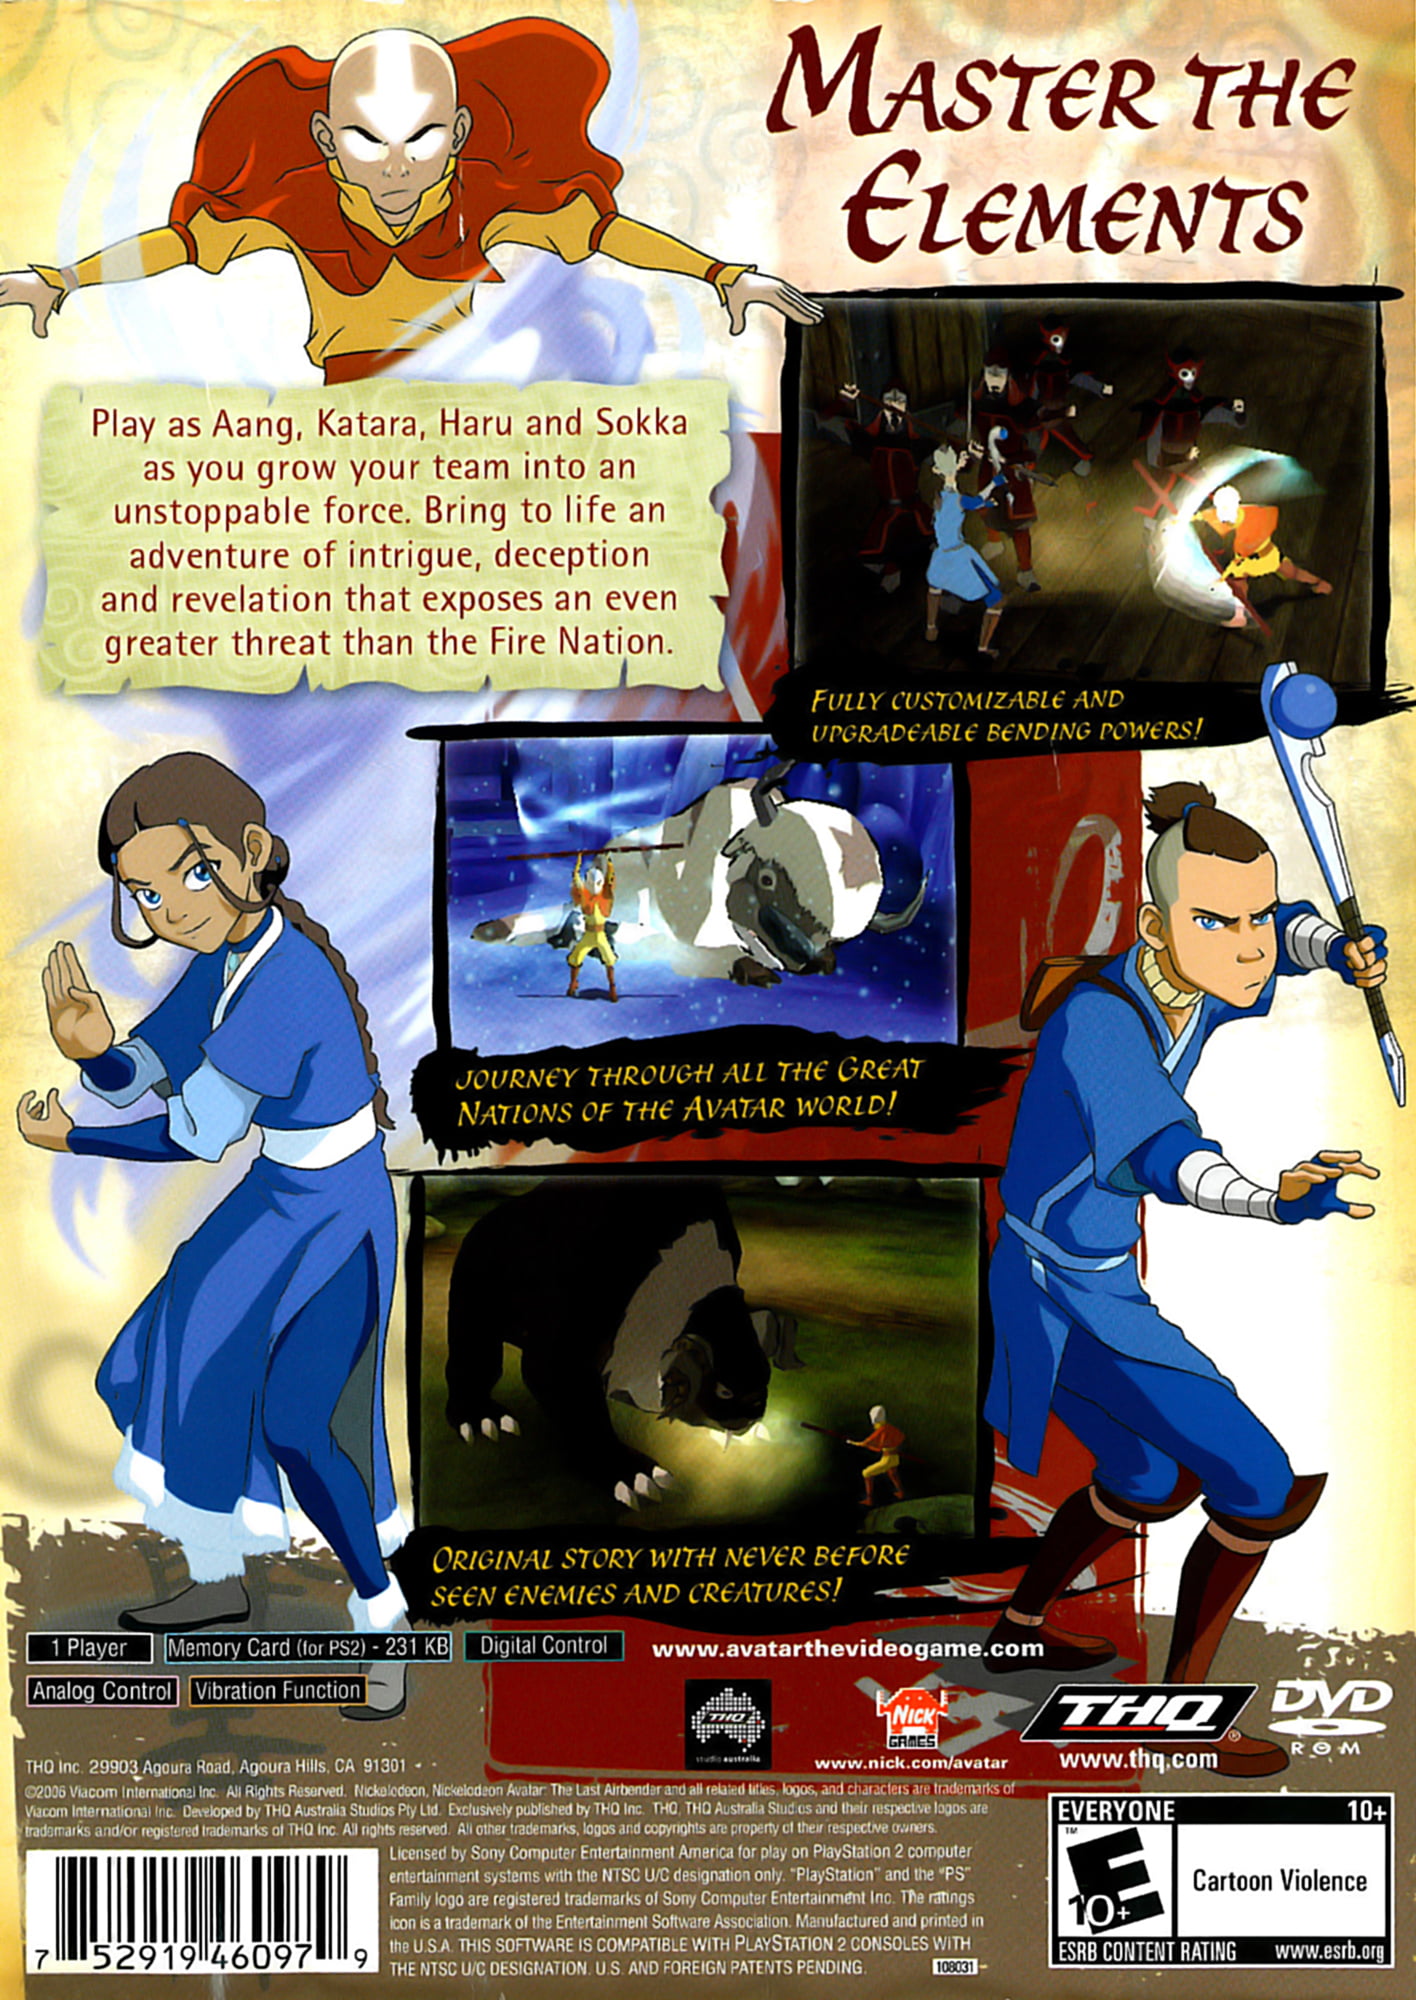 Avatar The Last Airbender  Sony PlayStation 2 PS2 w Manual  eBay